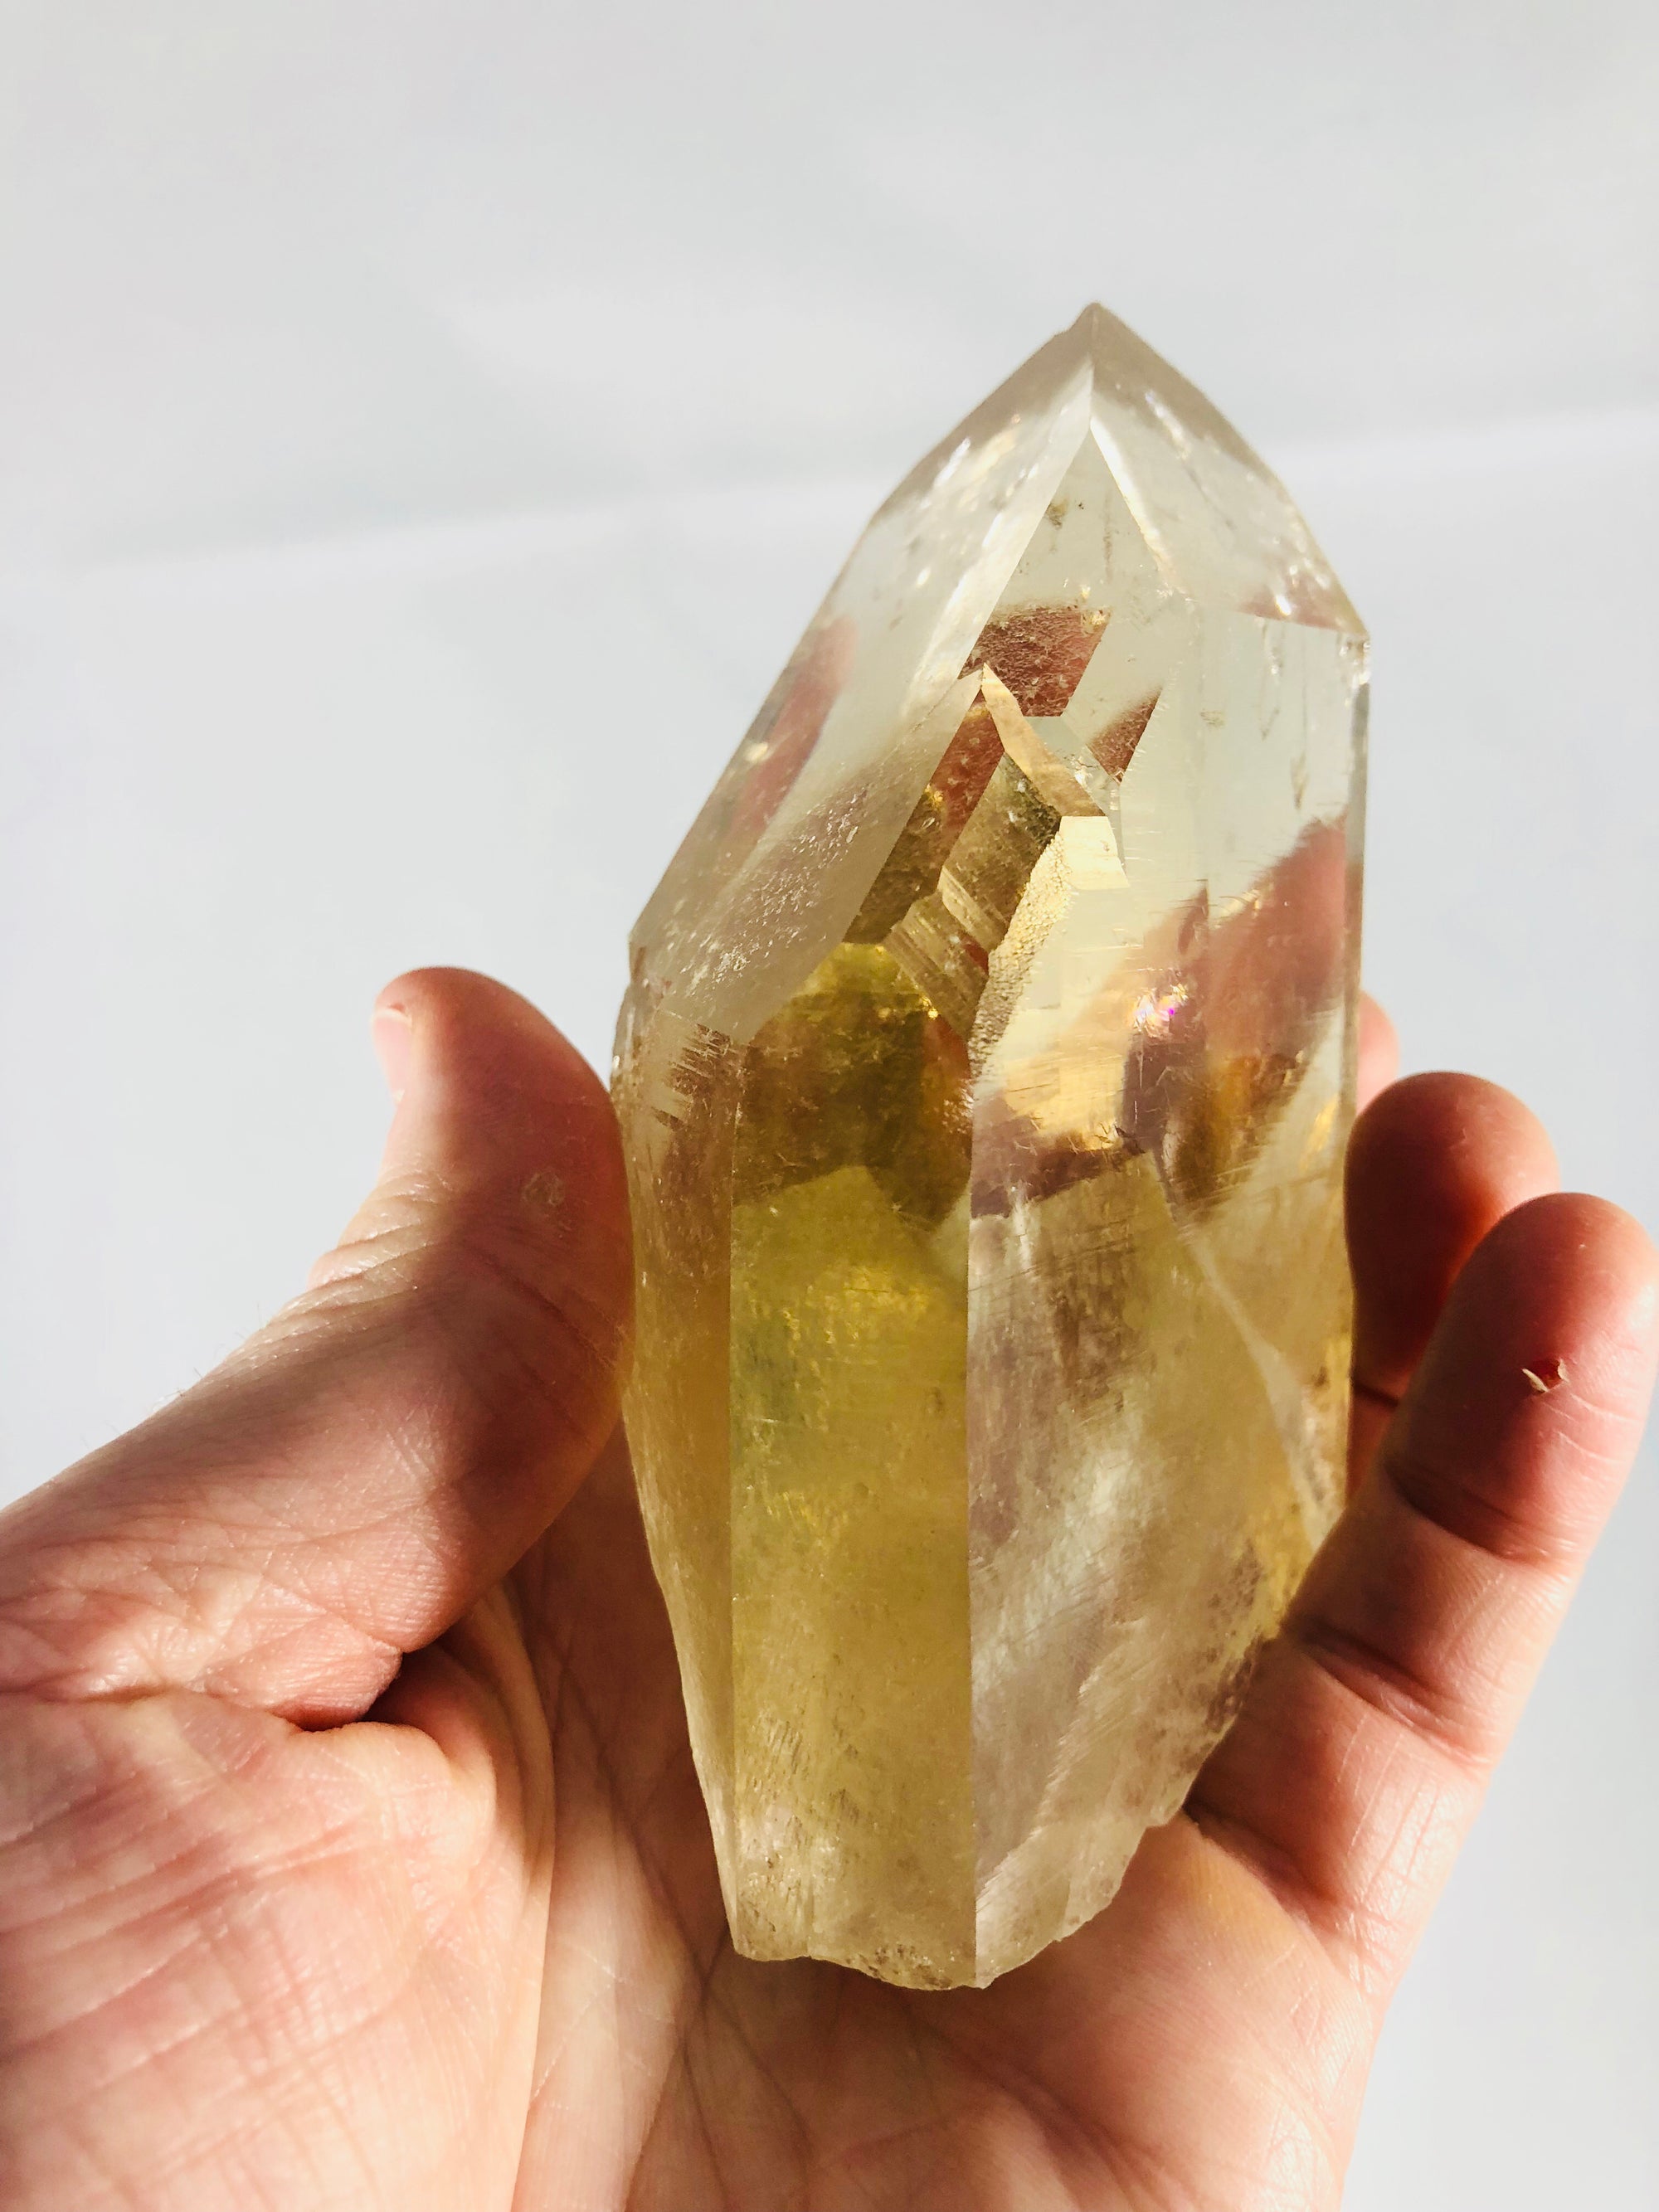 Natural Citrine Crystal